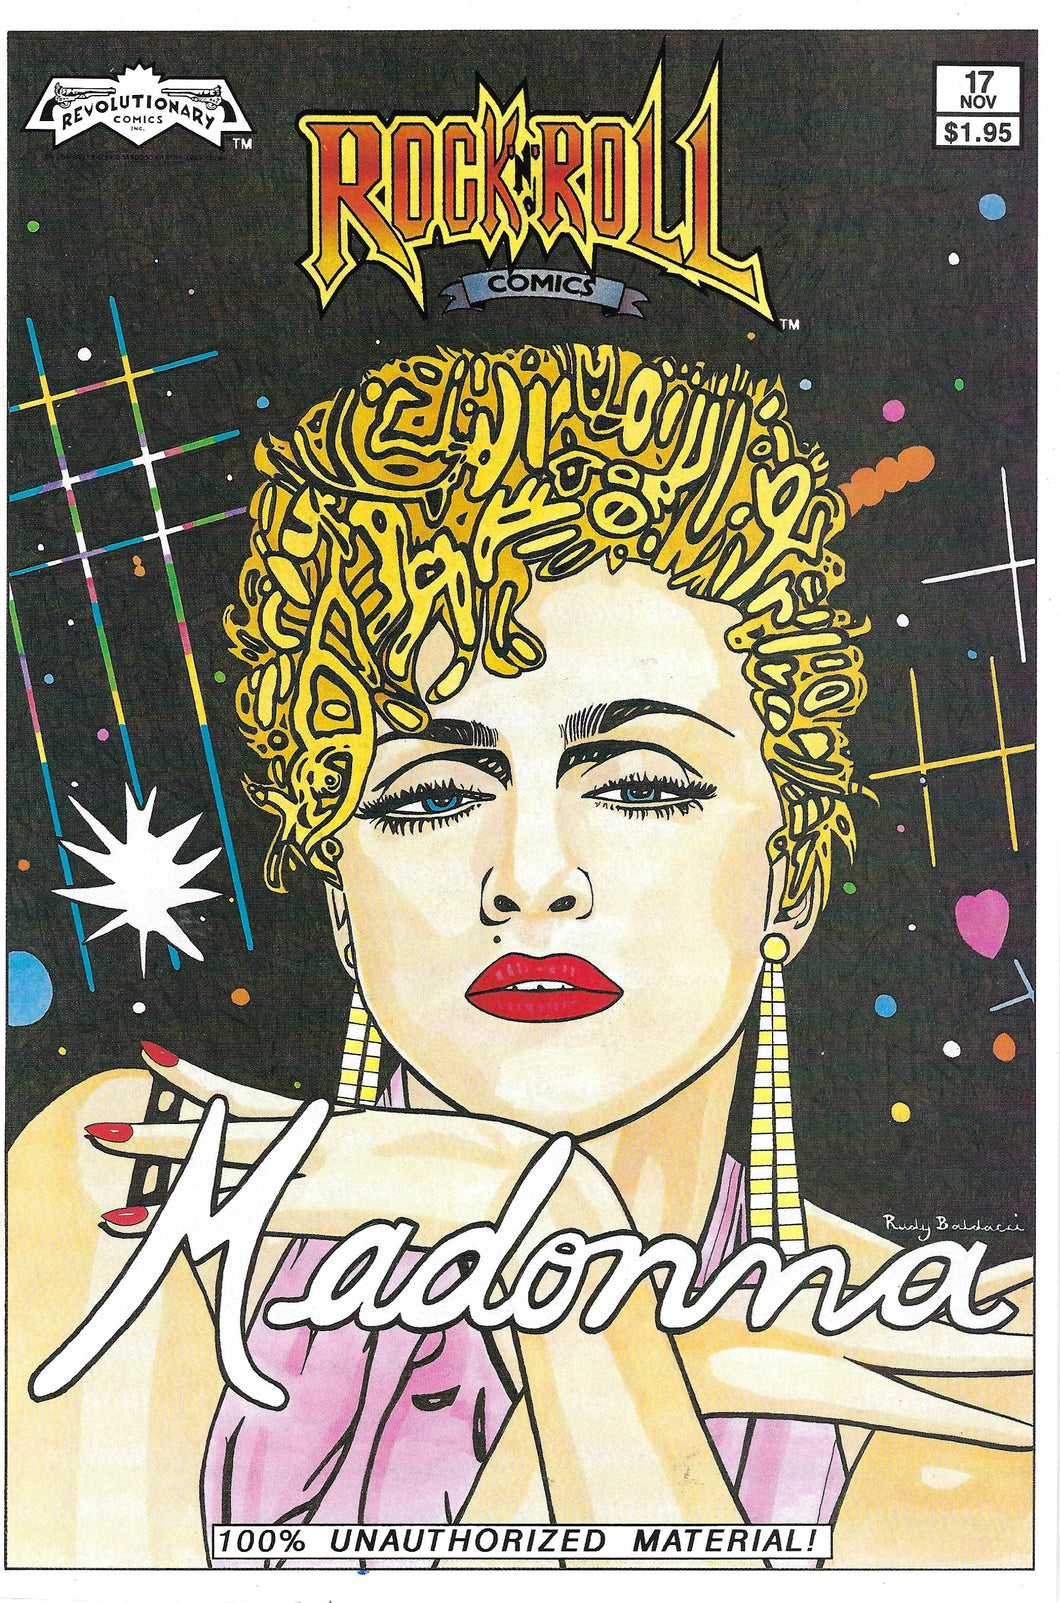 Rock n Roll comics #17 Madonna